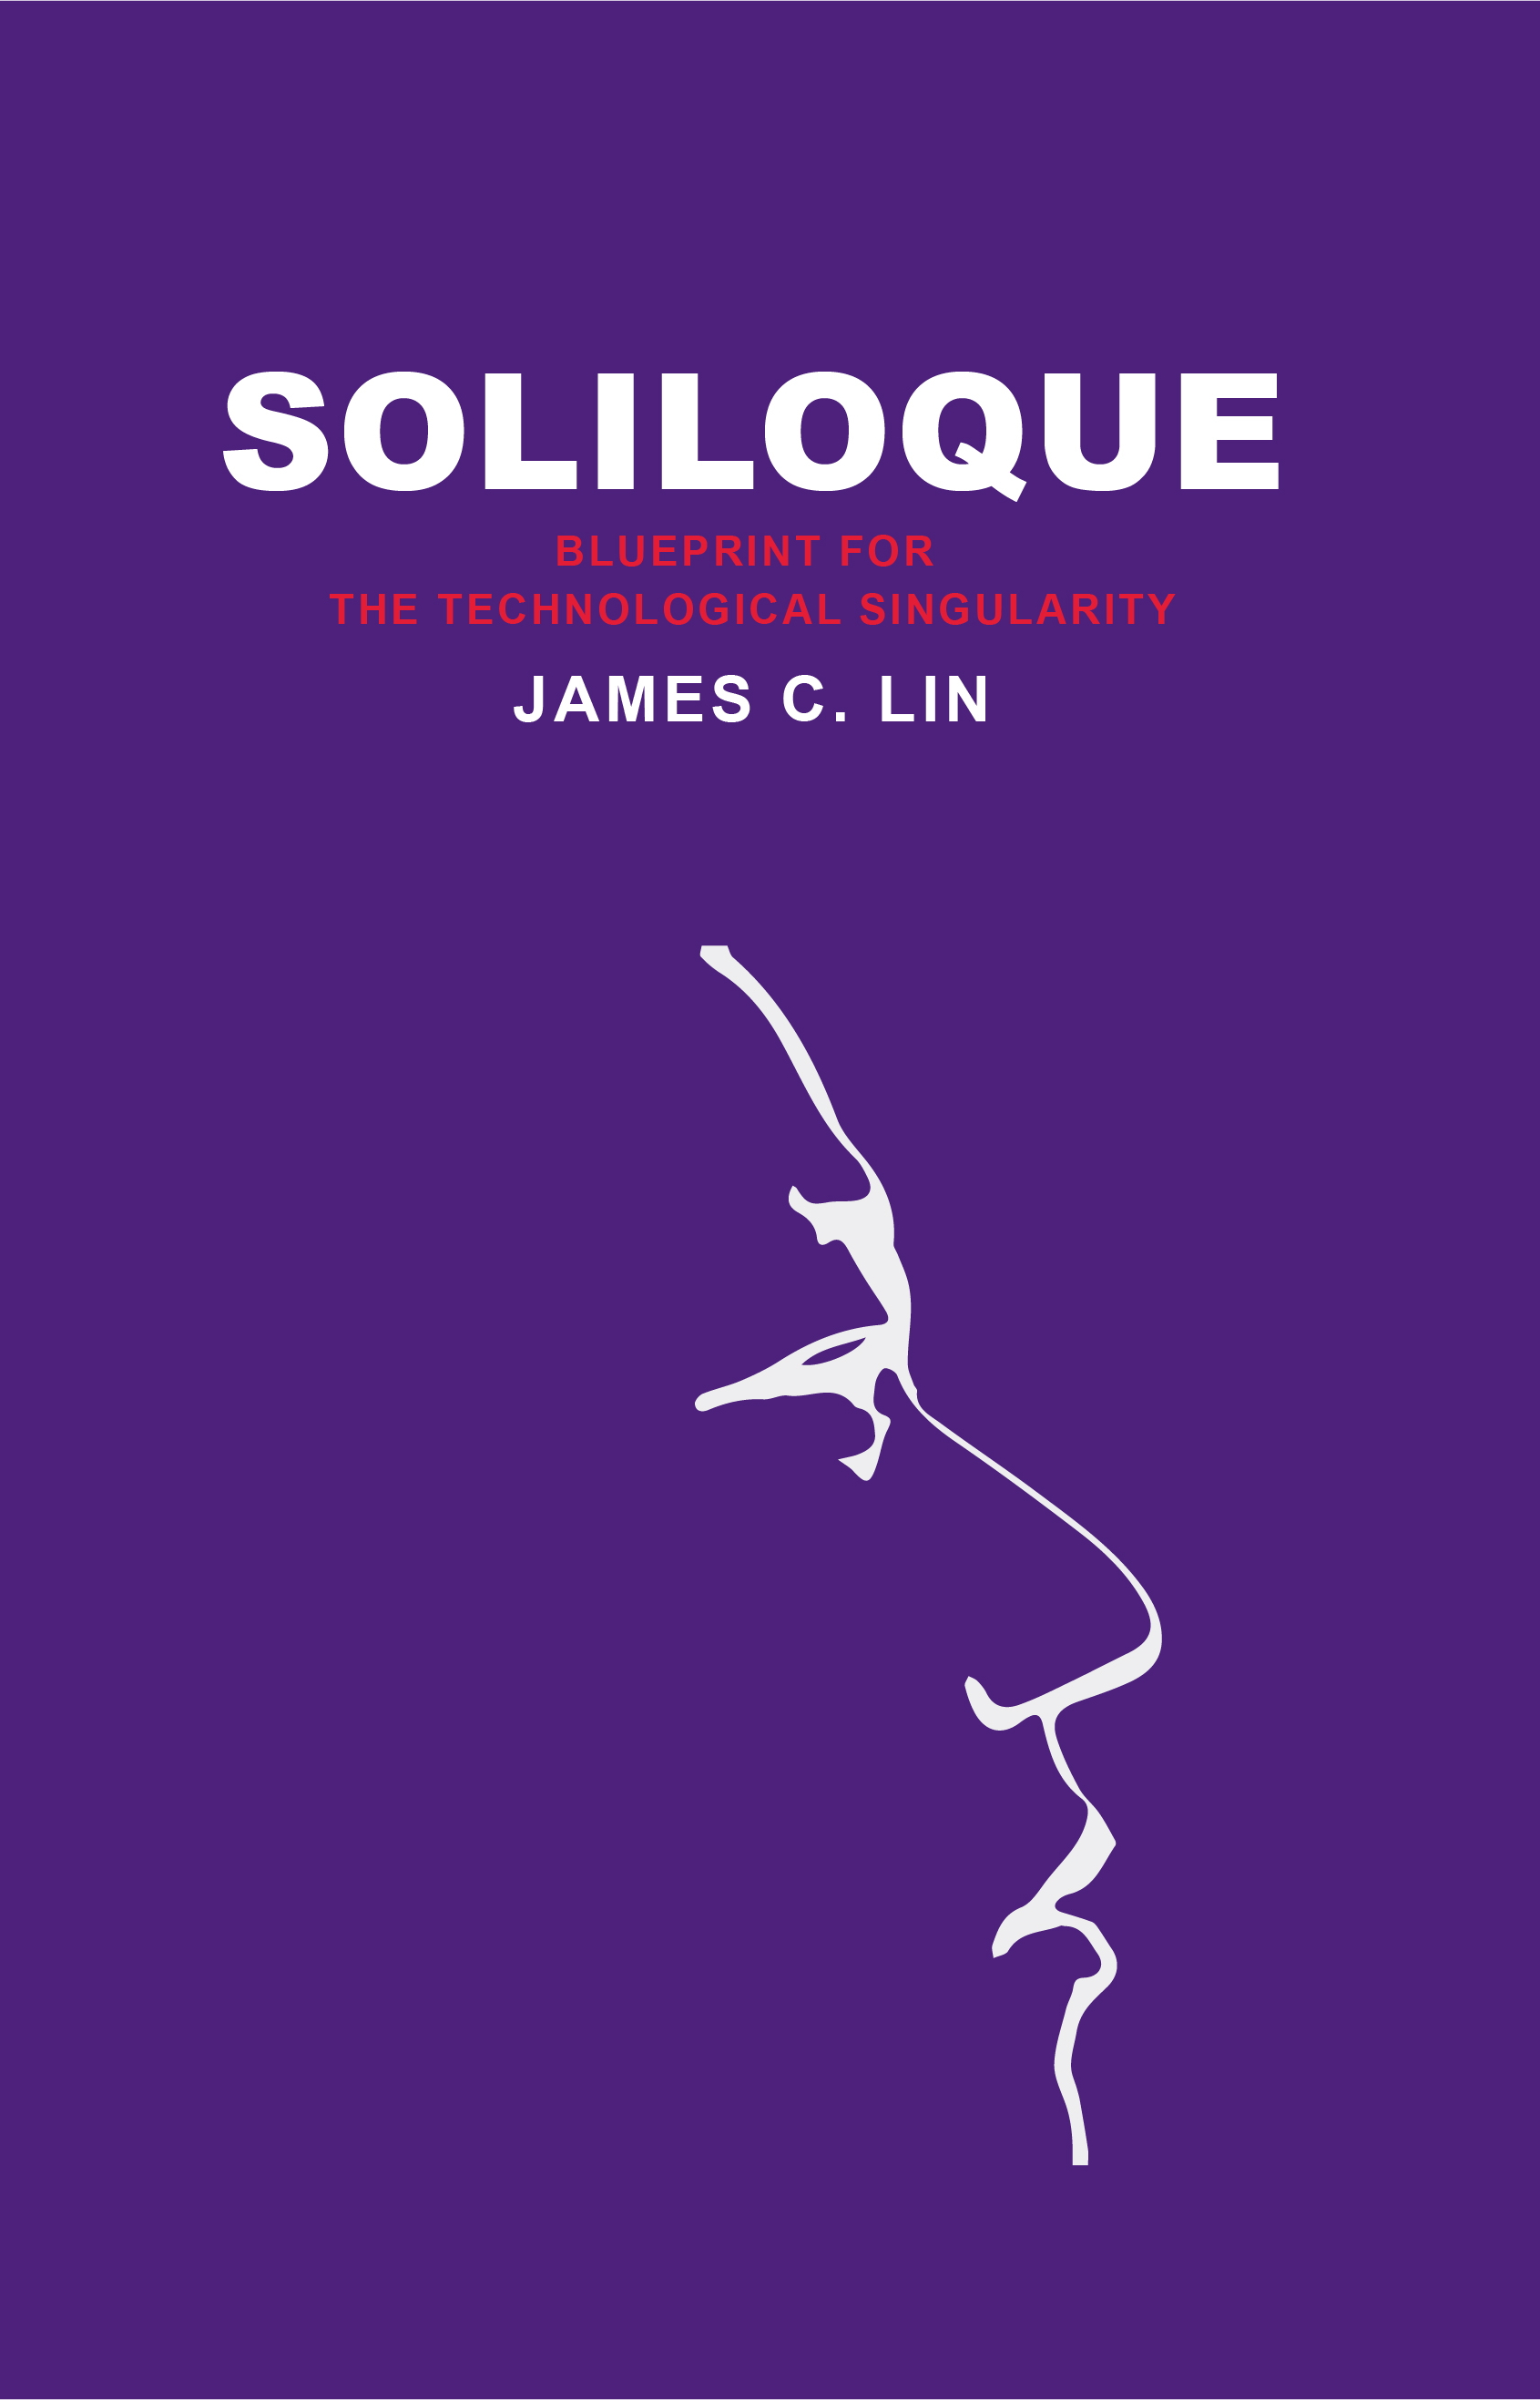 Bookcover of Soliloque James C. Lin